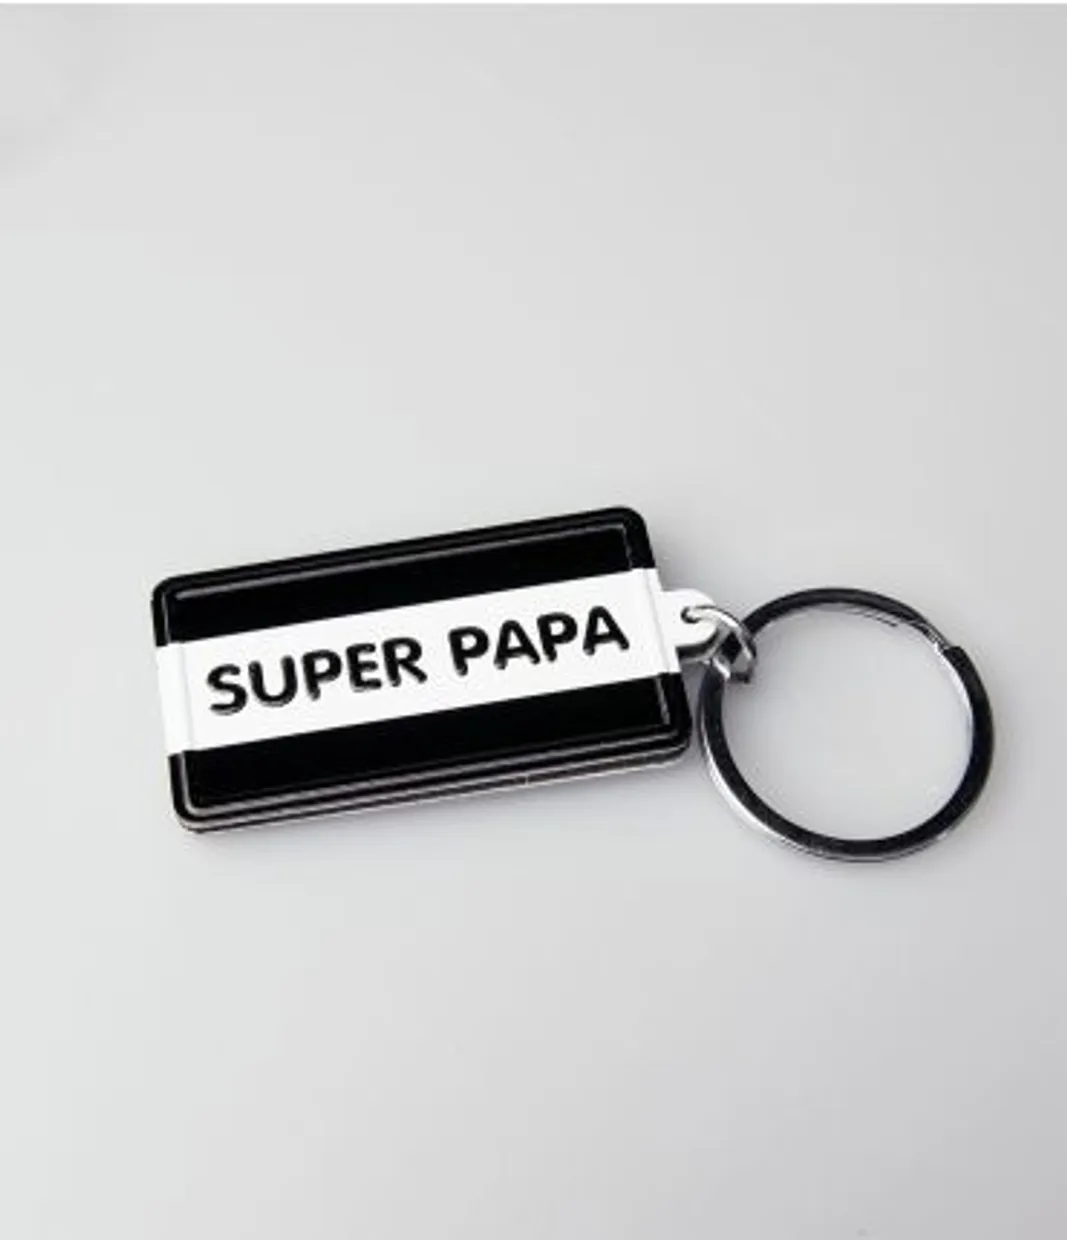 sleutelhanger "SUPER PAPA"